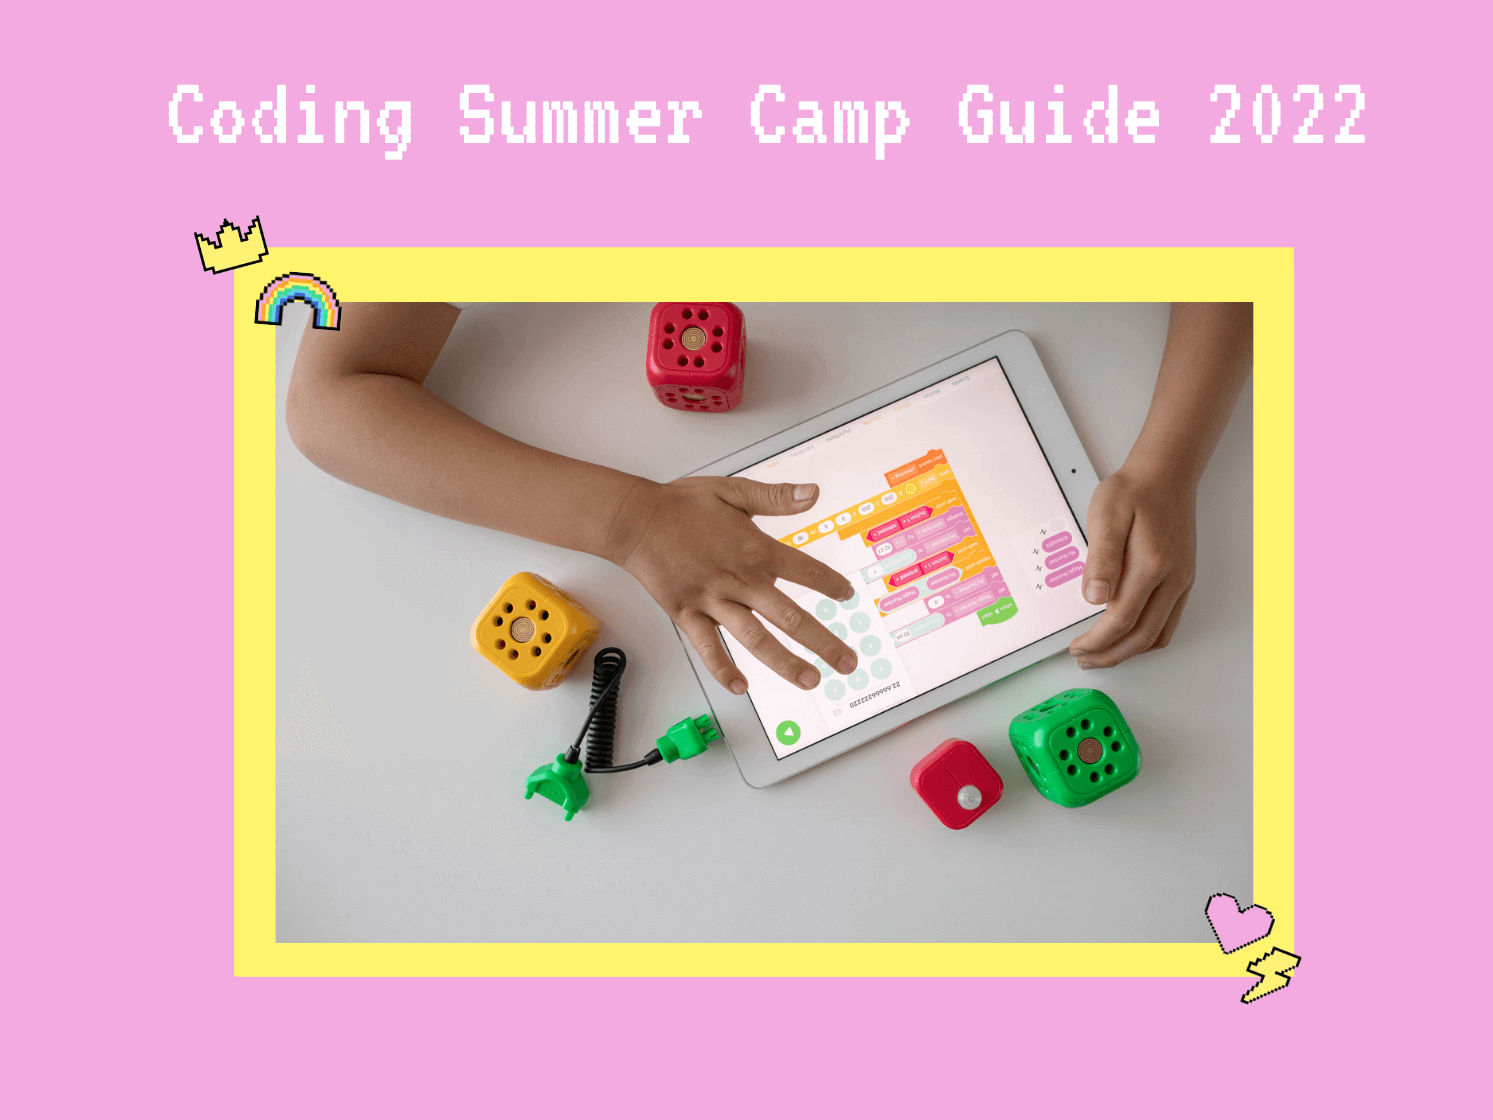 Summer Coding Camp Guide 2022 - North America